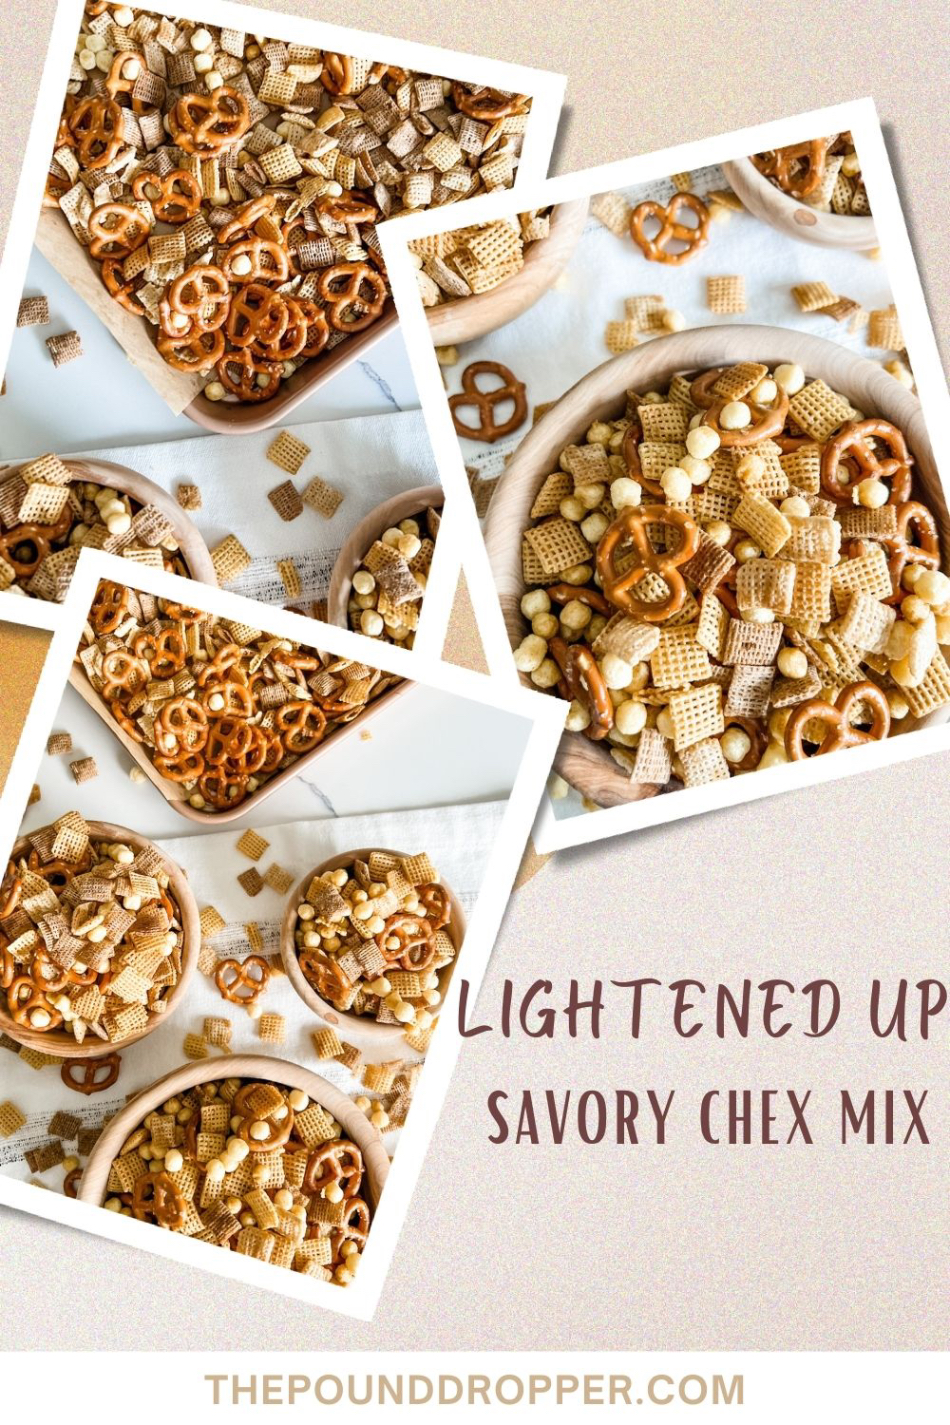 Lightened Up Savory Chex Party Mix via @pounddropper